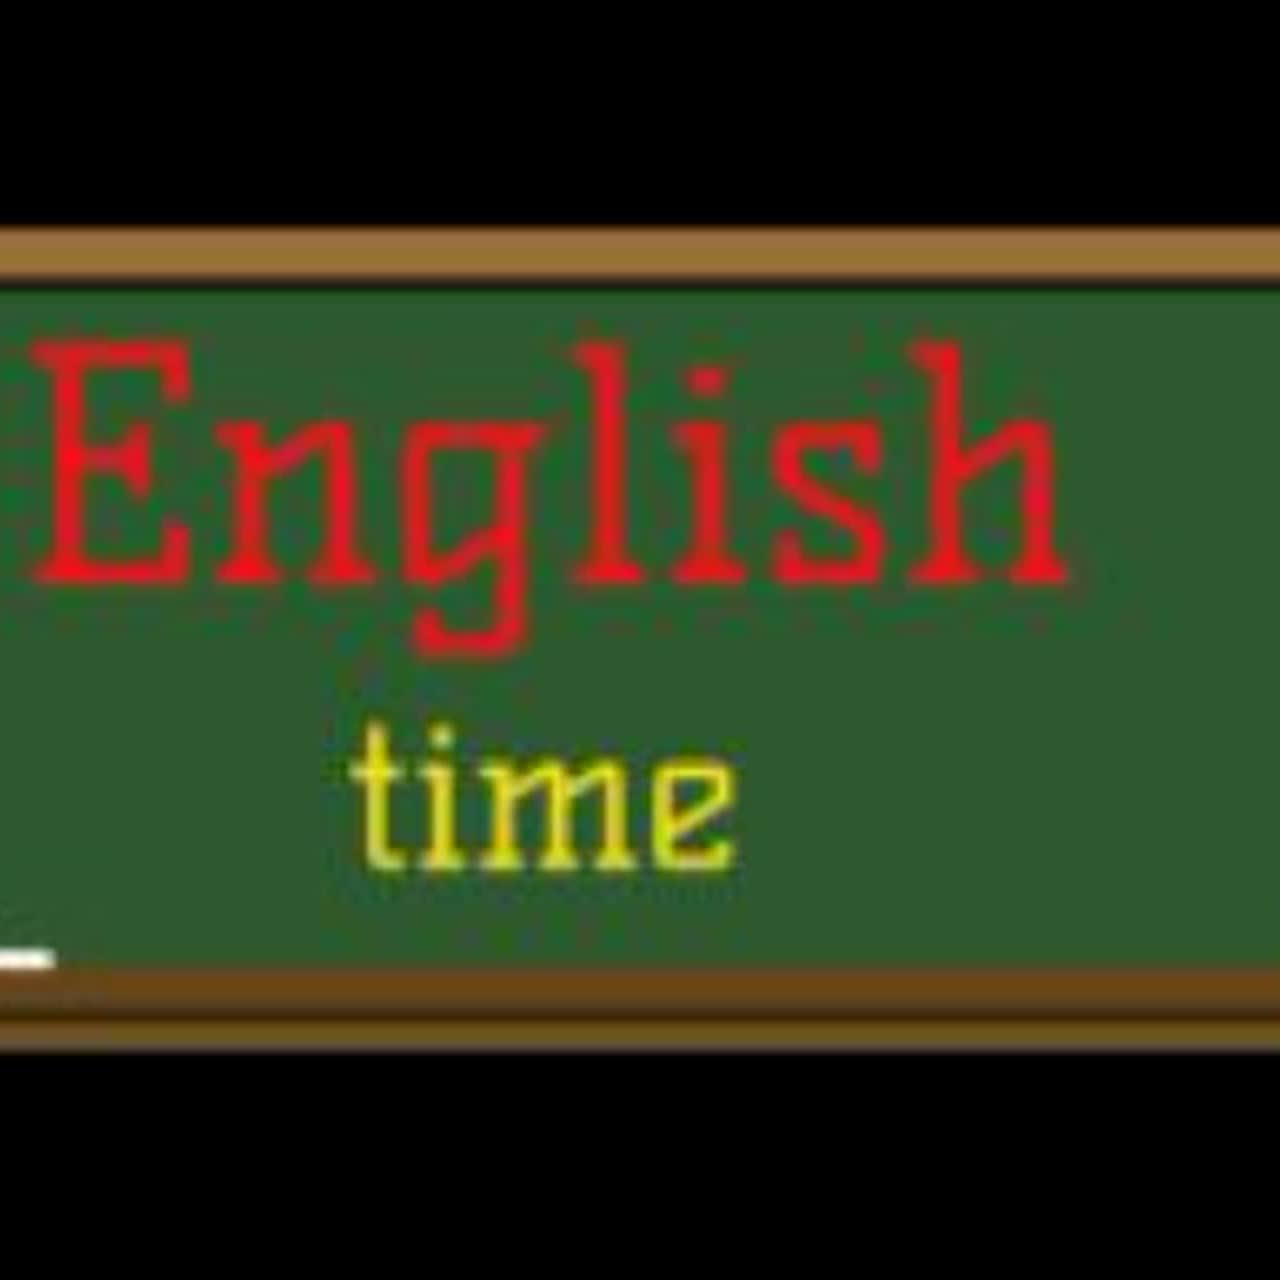 English time